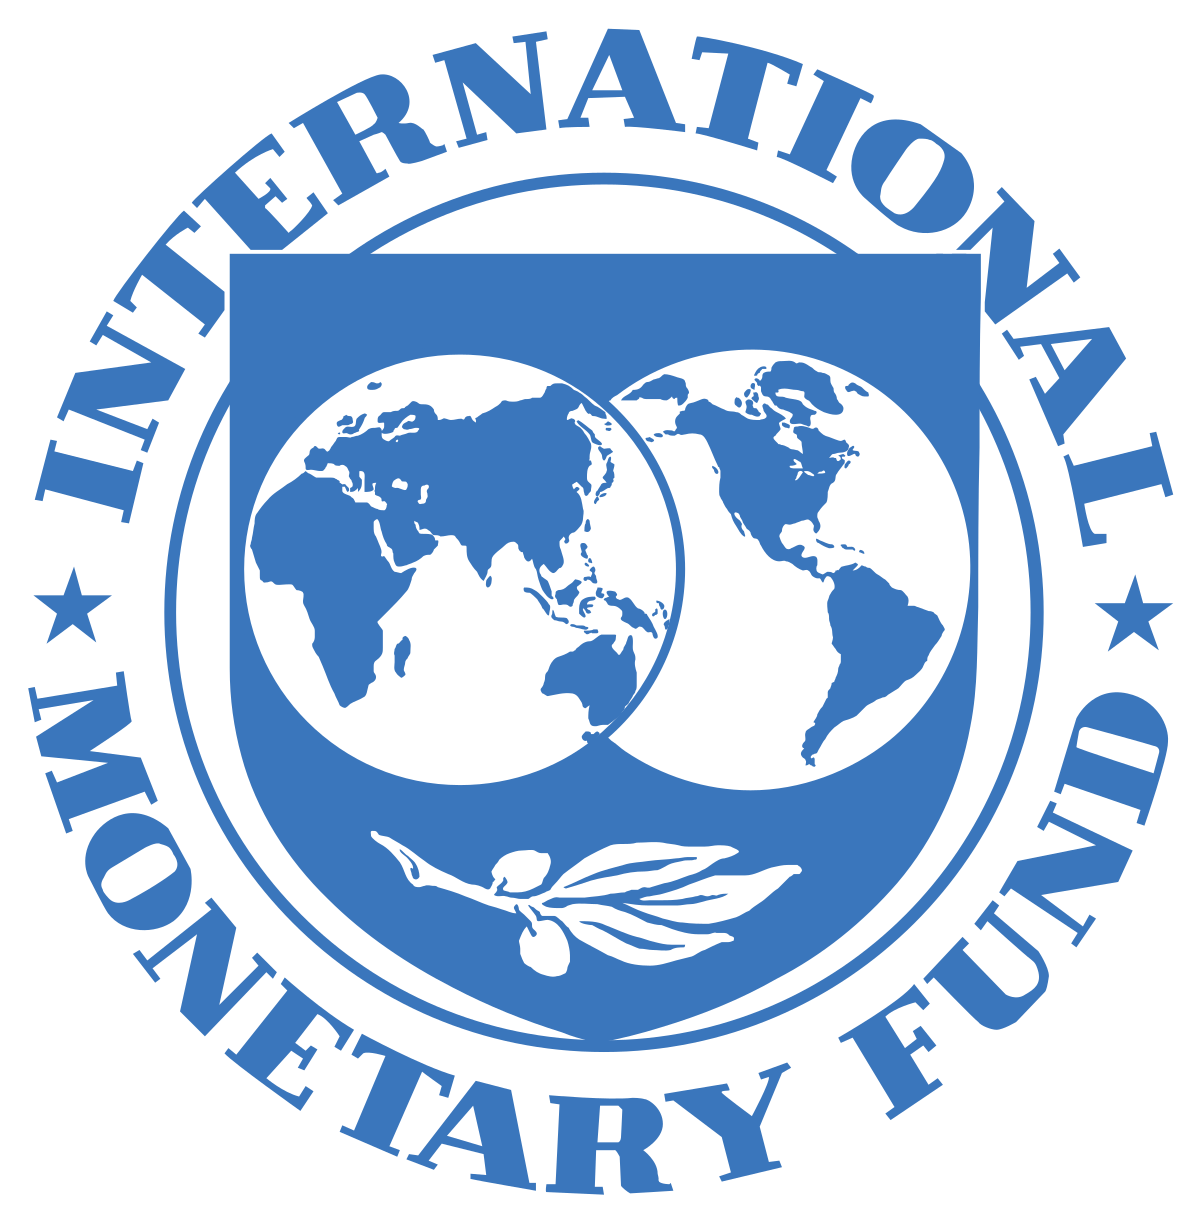 new-online-resource-imf-international-monetary-fund-maastricht